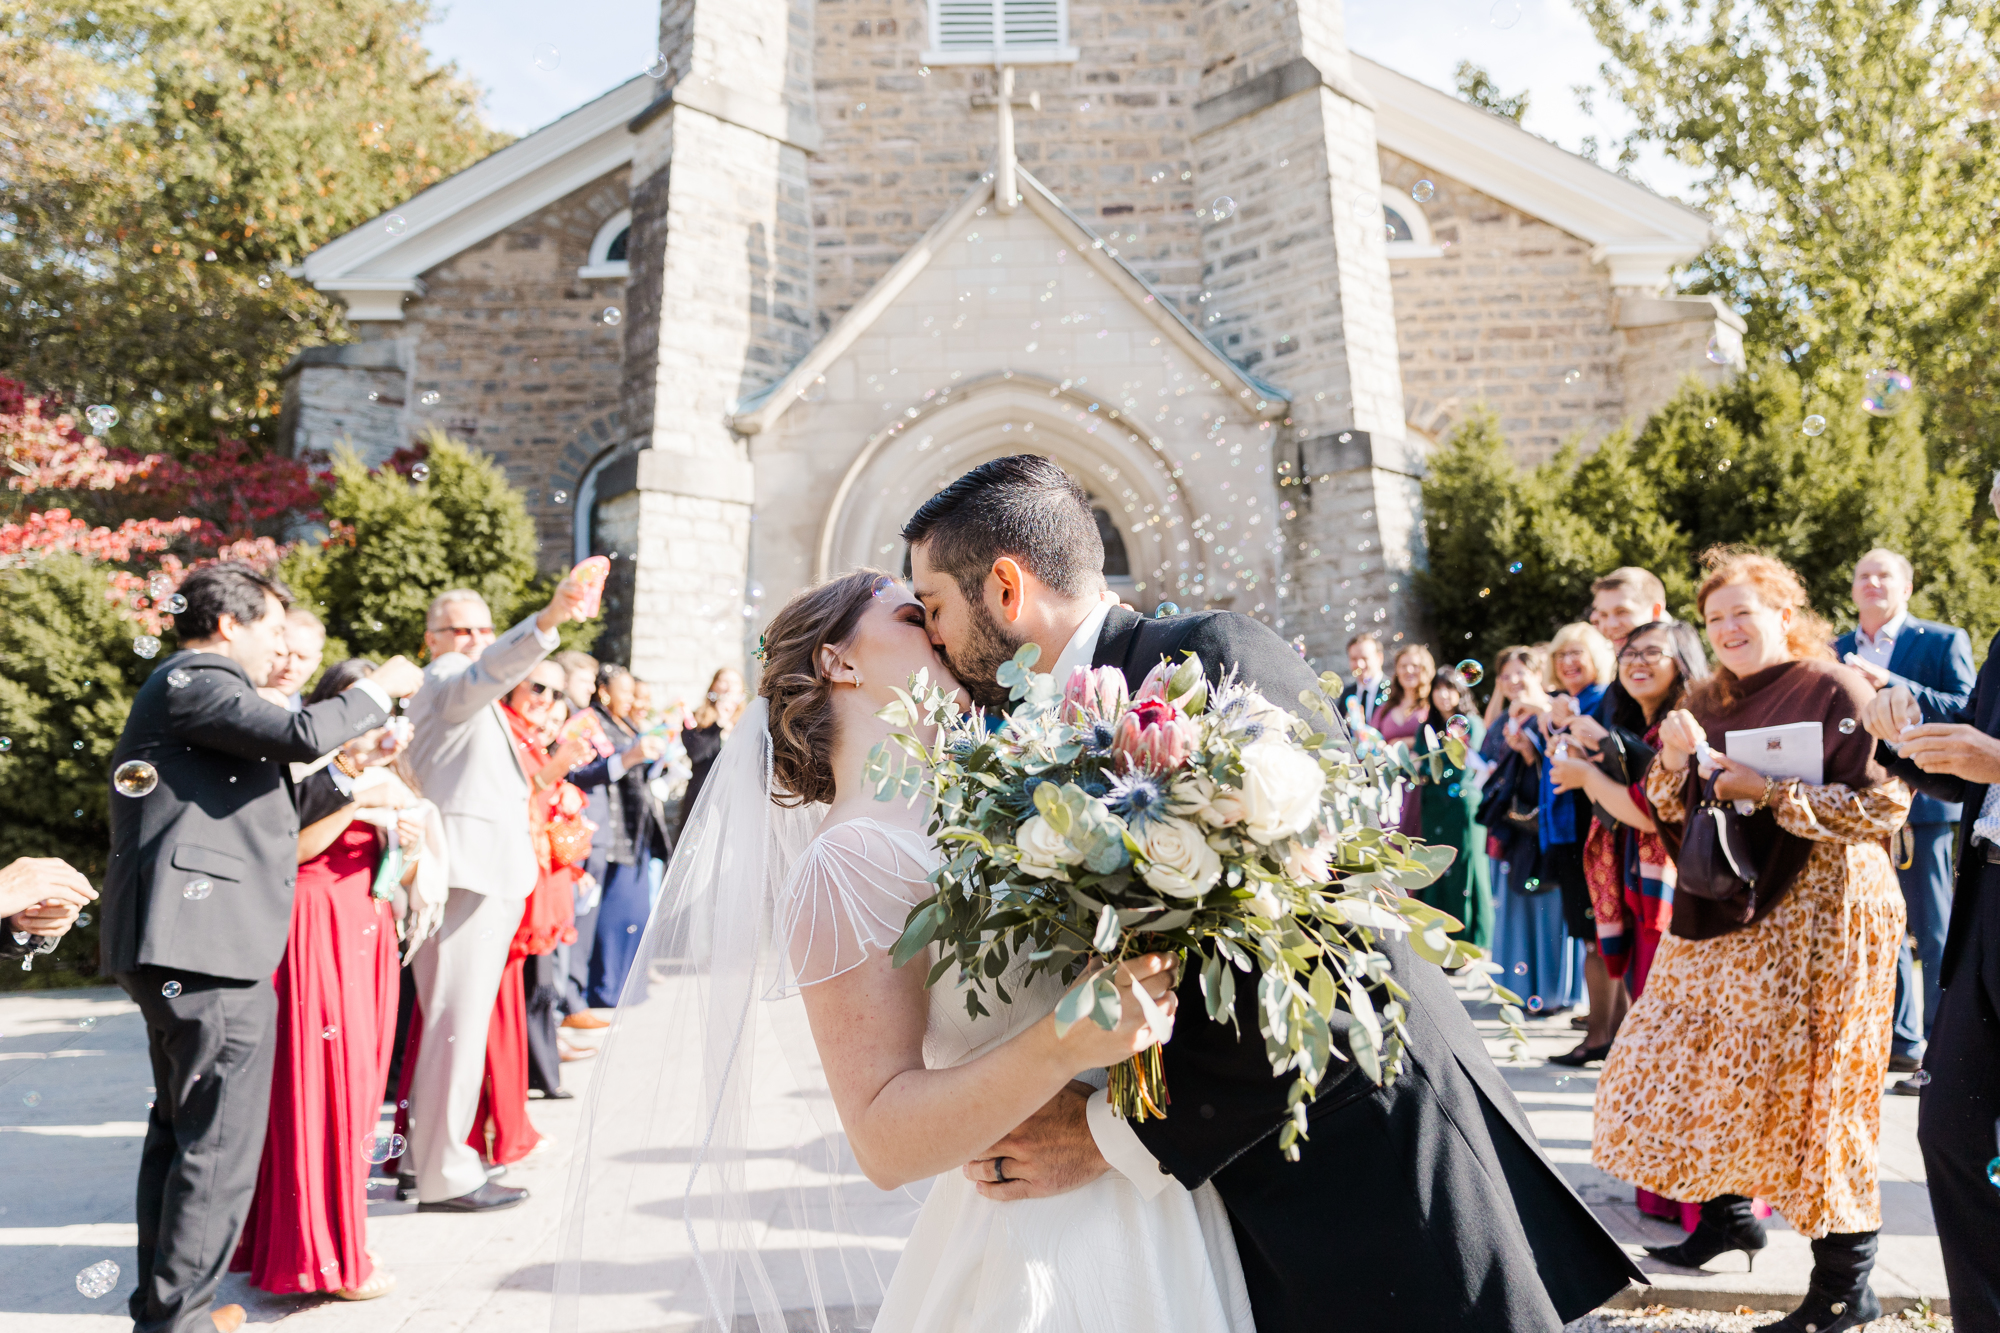 Joyous Gate House Wedding in Ontario, Canada